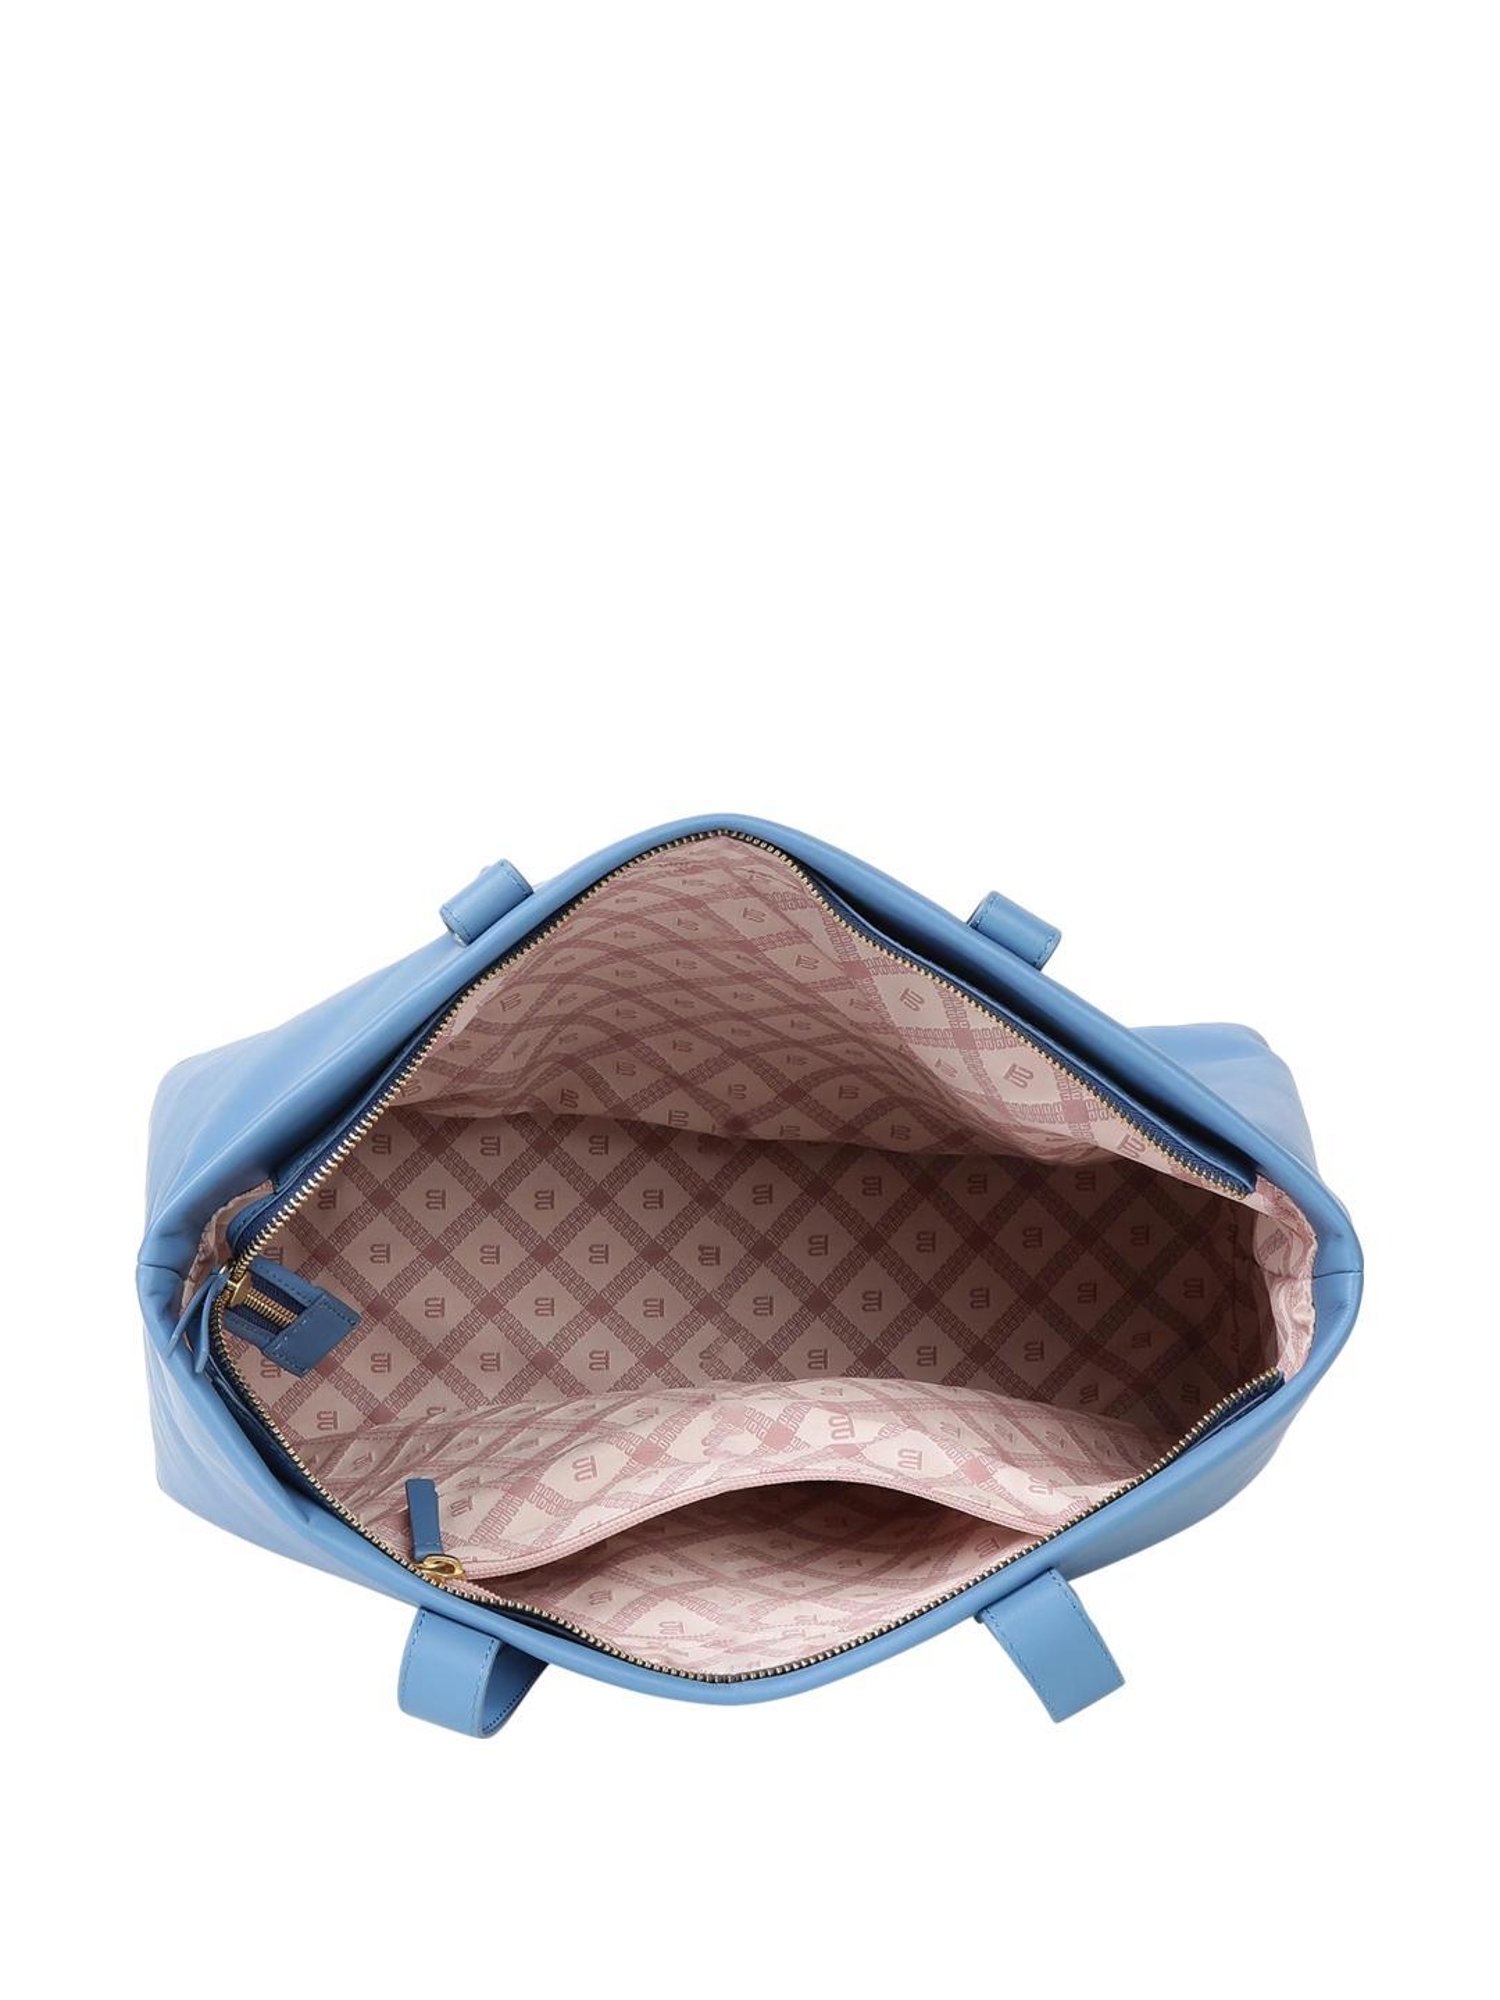 Buy Styli Black Scarf Textured Handbag at Best Price @ Tata CLiQ